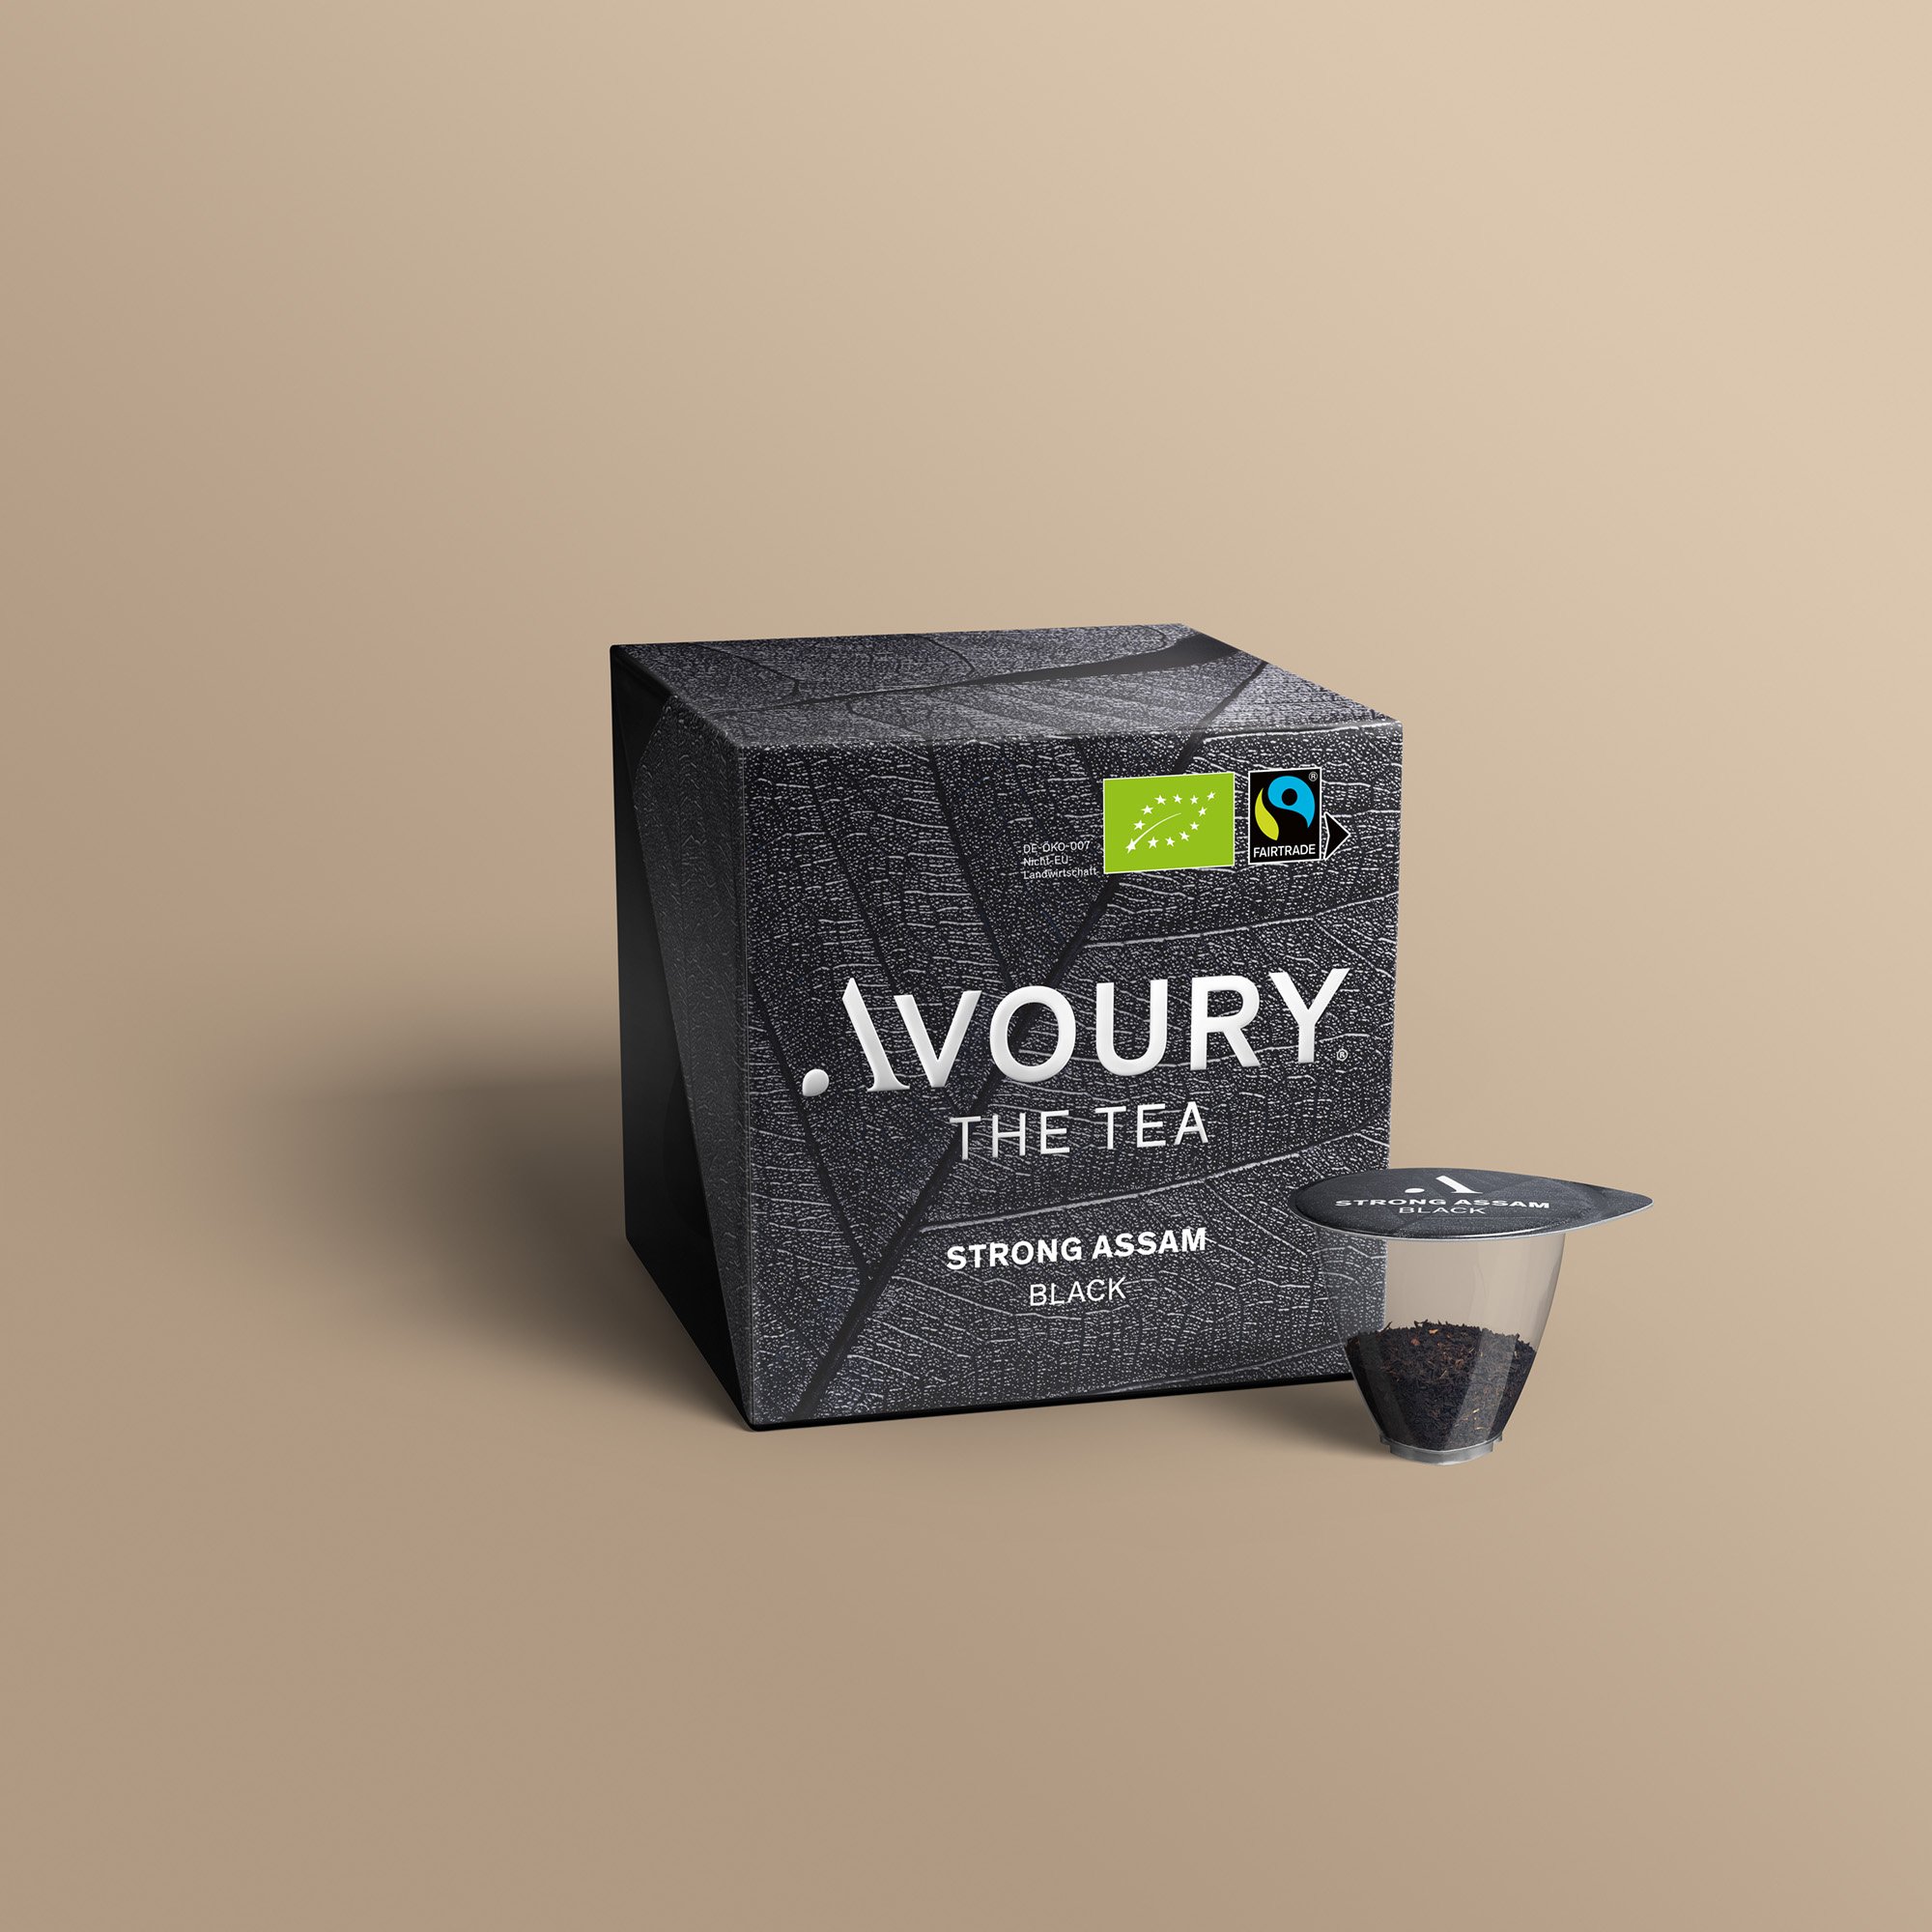 Strong Assam  | Avoury. The Tea.